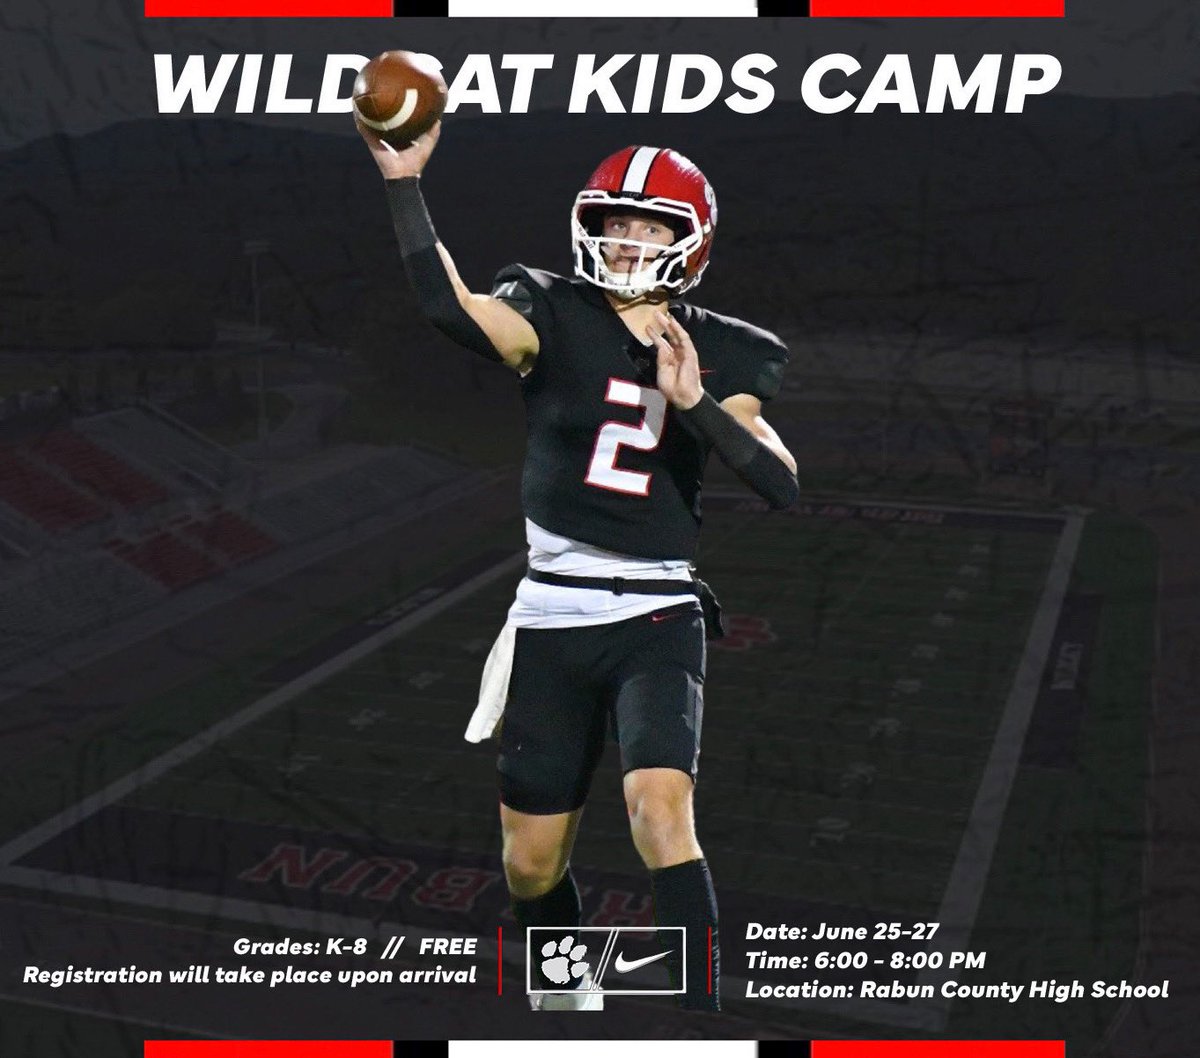 Future Wildcat Kids Camp! 🗓️ June 25-27 ⏰ 6:00-8:00 PM 📍 Rabun County High School 🎟️ Free | Grades: K-8 ✍🏼 Register upon arrival #rideforthebrand / #waR